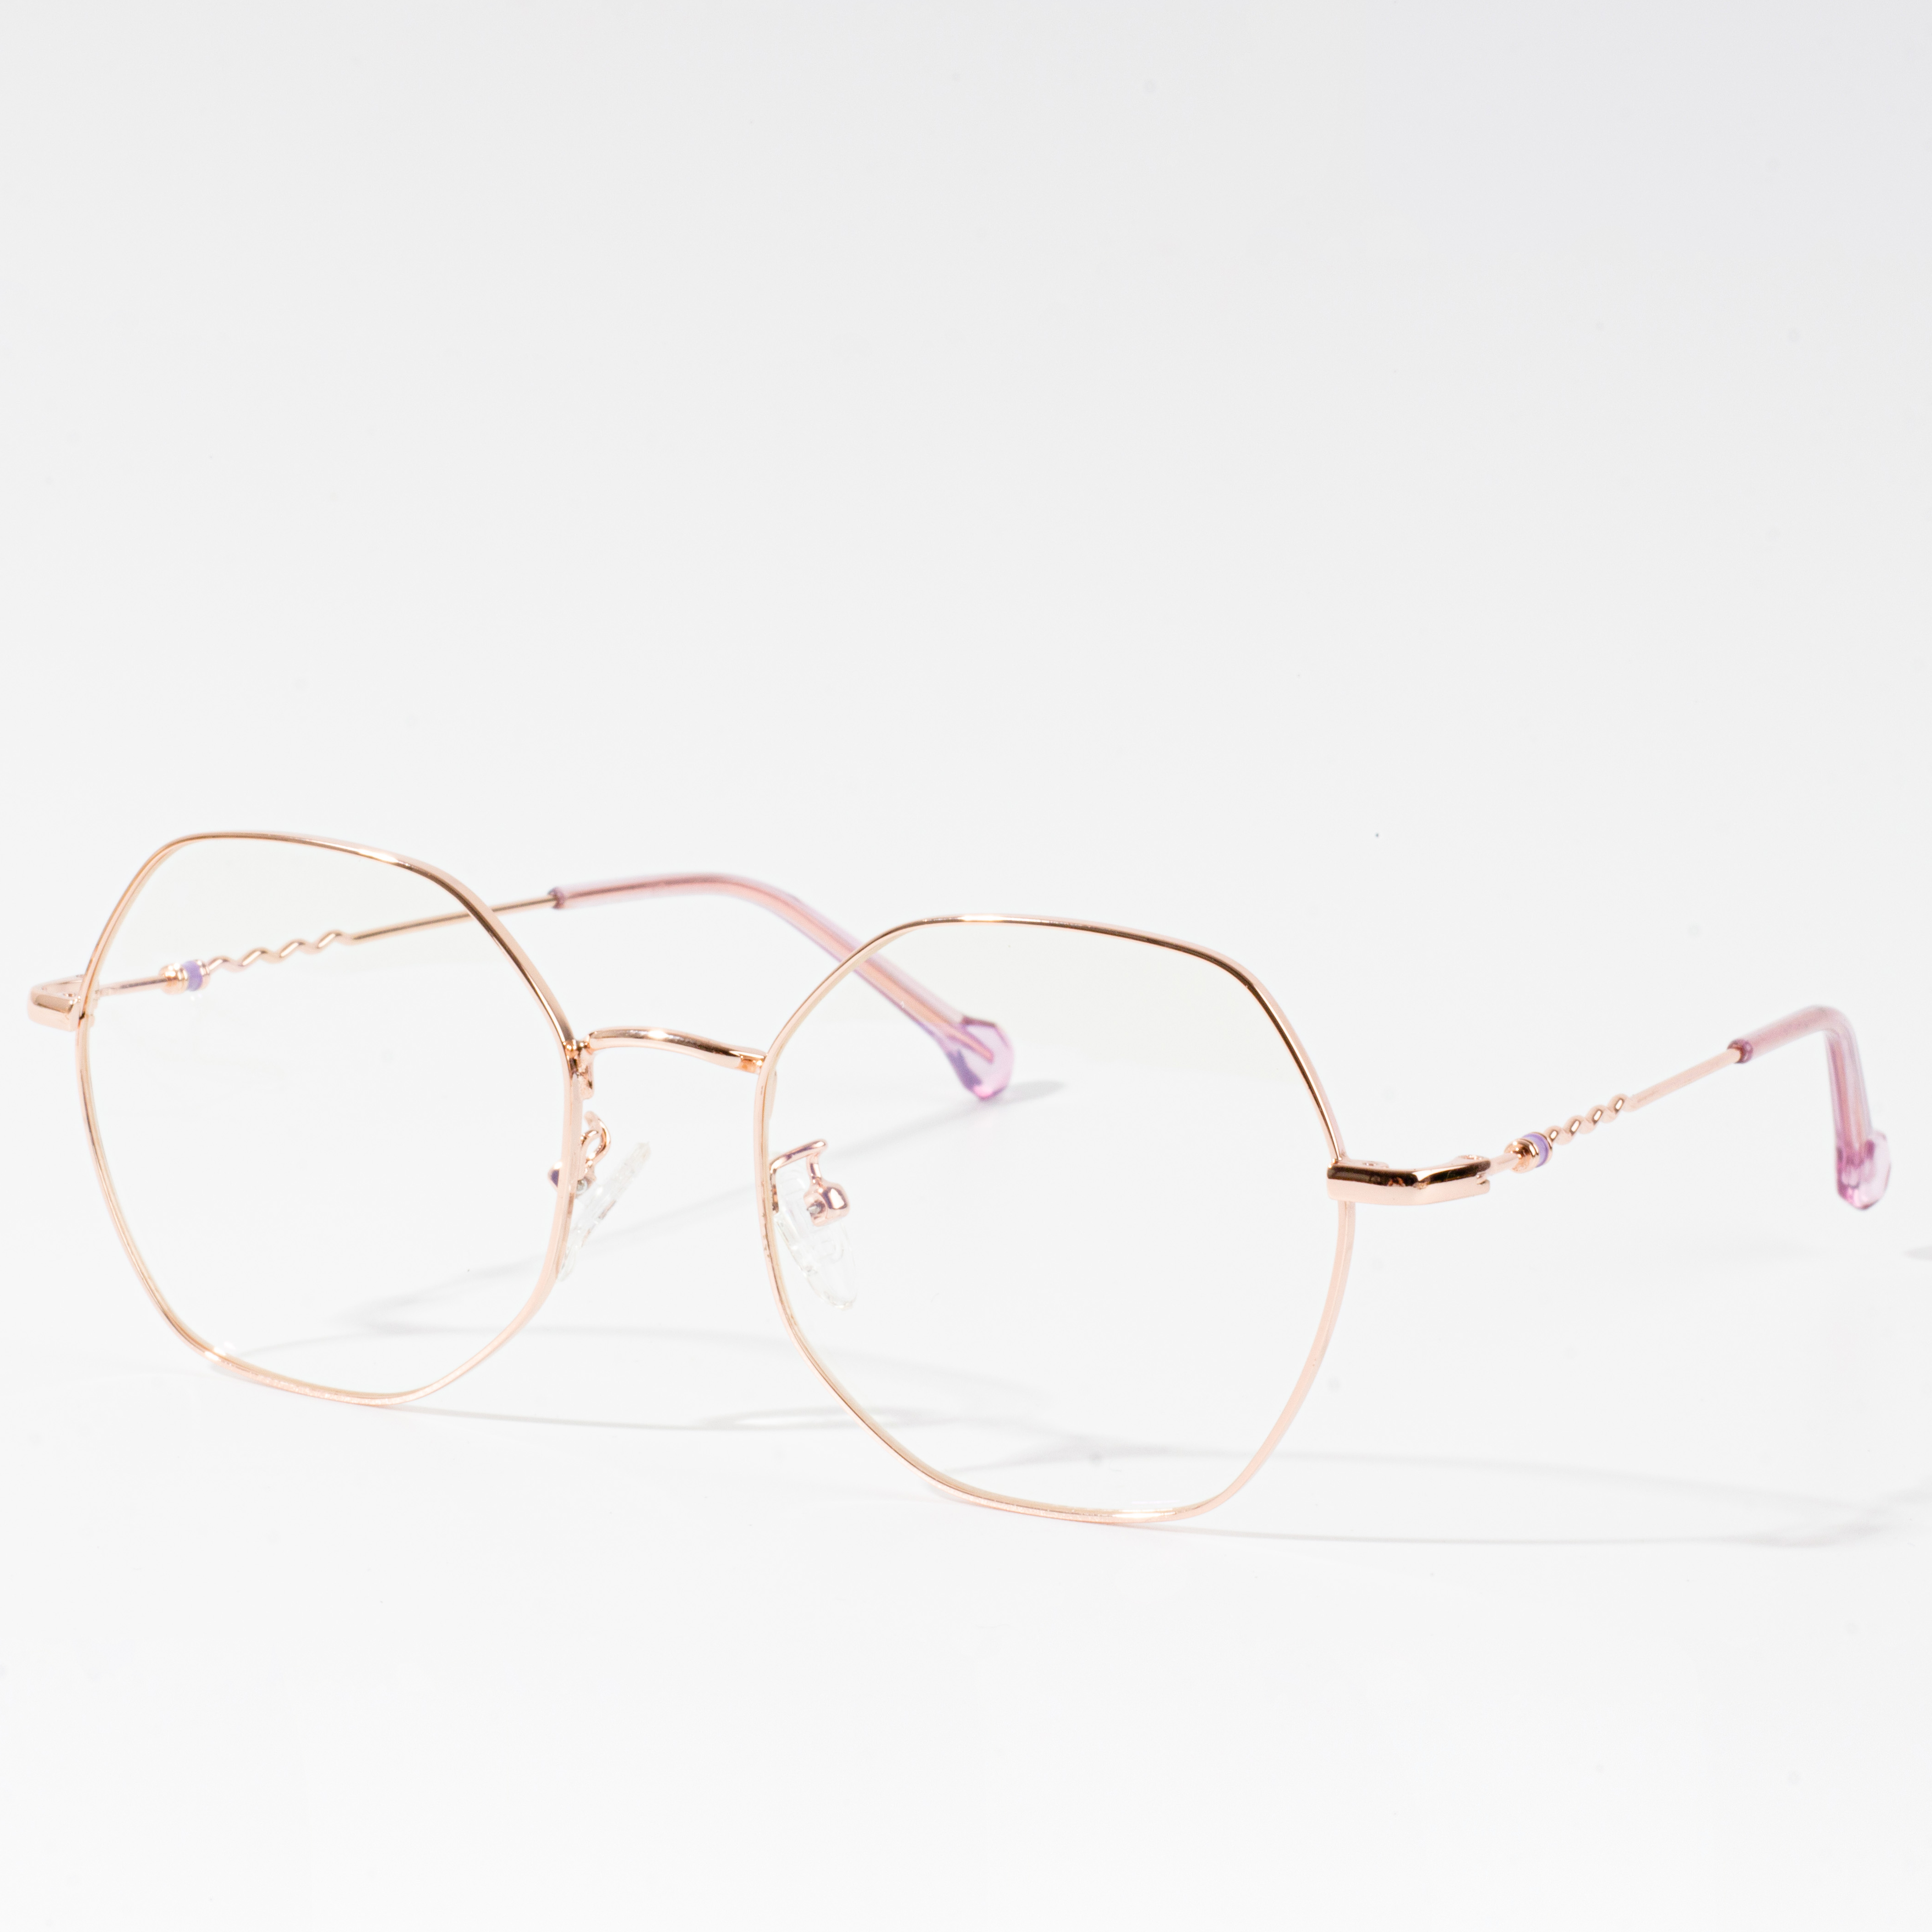 uso eyeglass frames